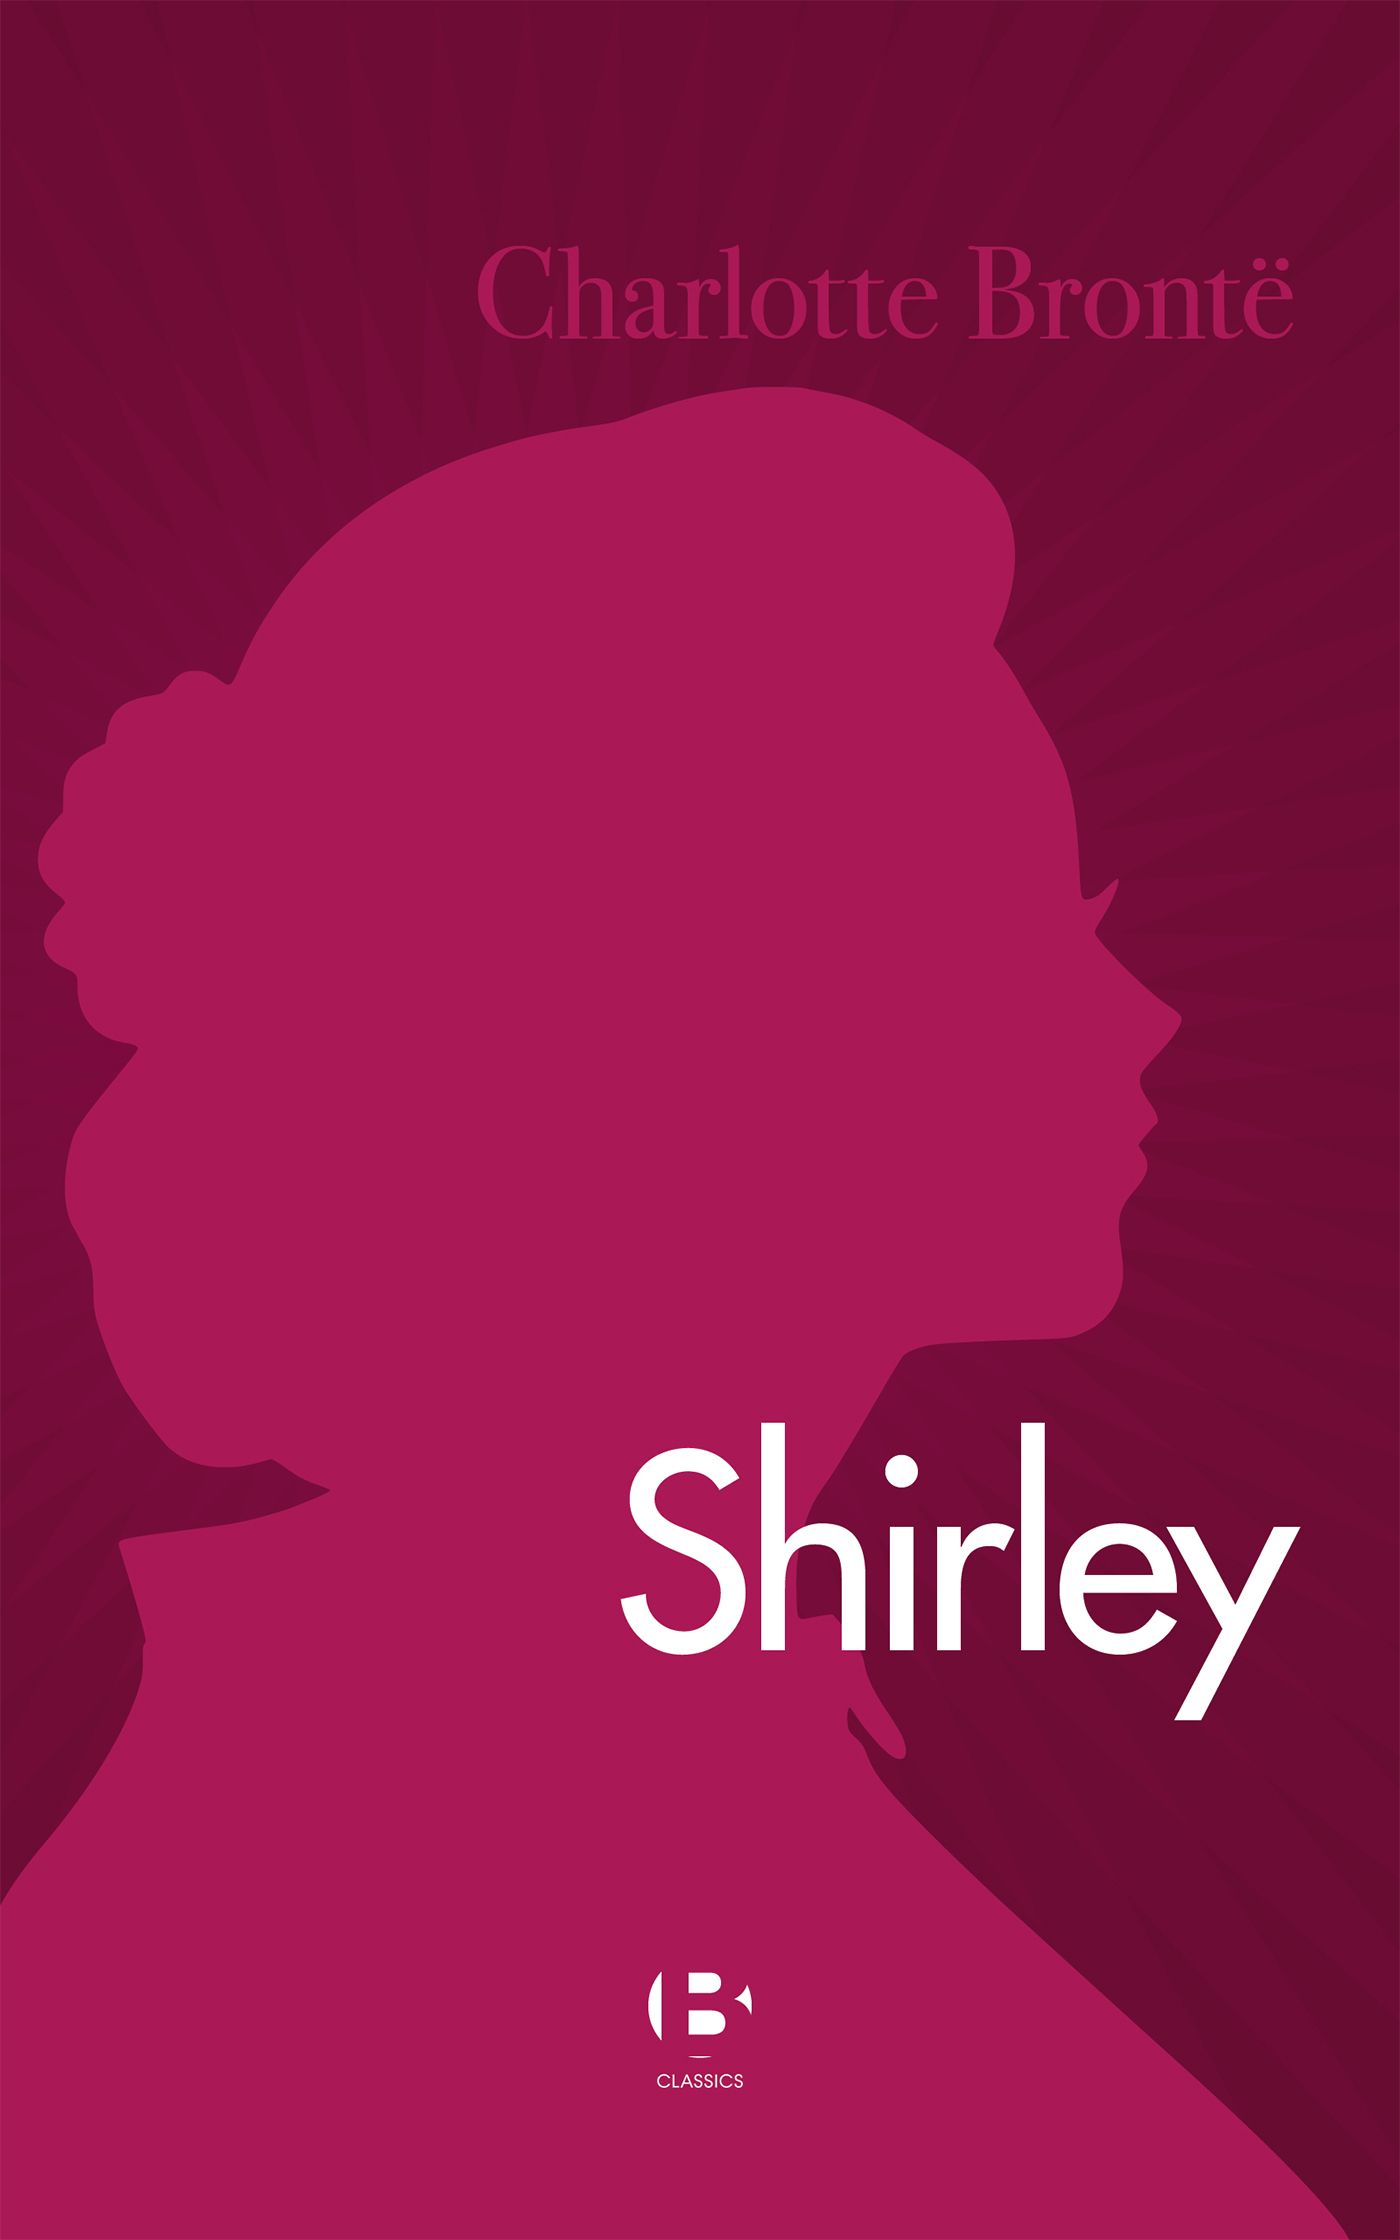 Shirley, eBook by Charlotte Brontë